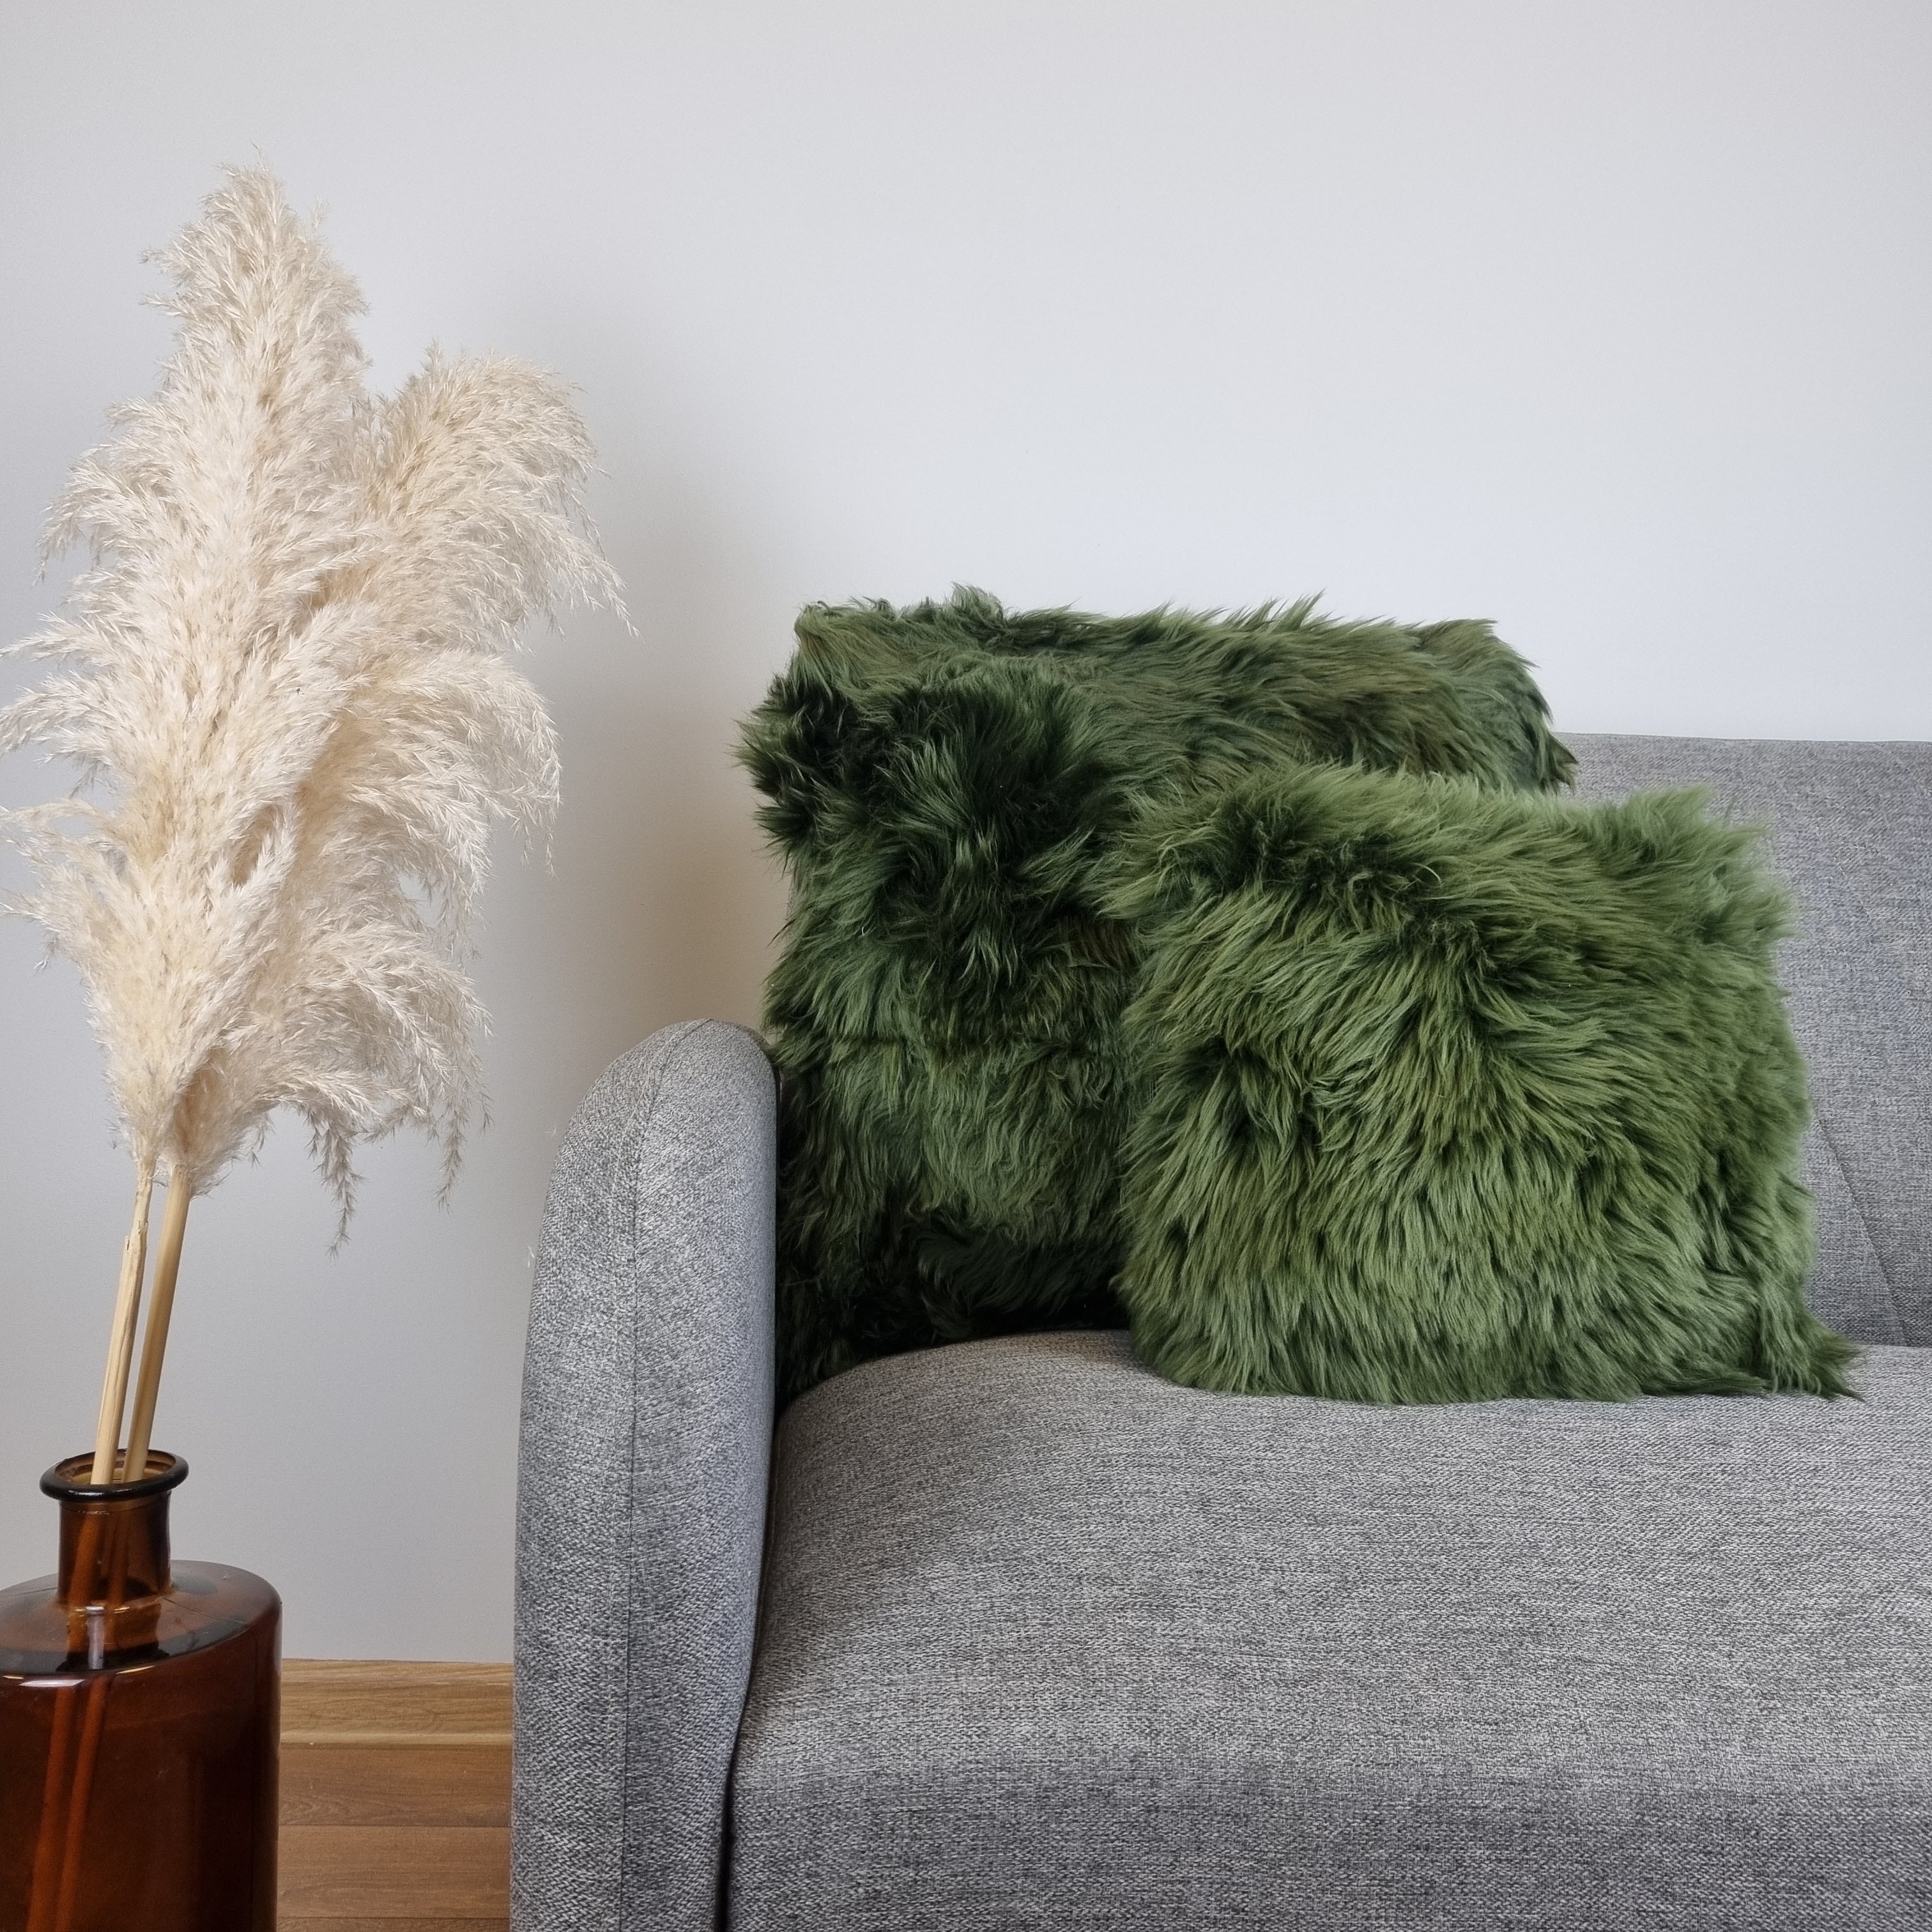 Green genuine sheepskin throw pillow